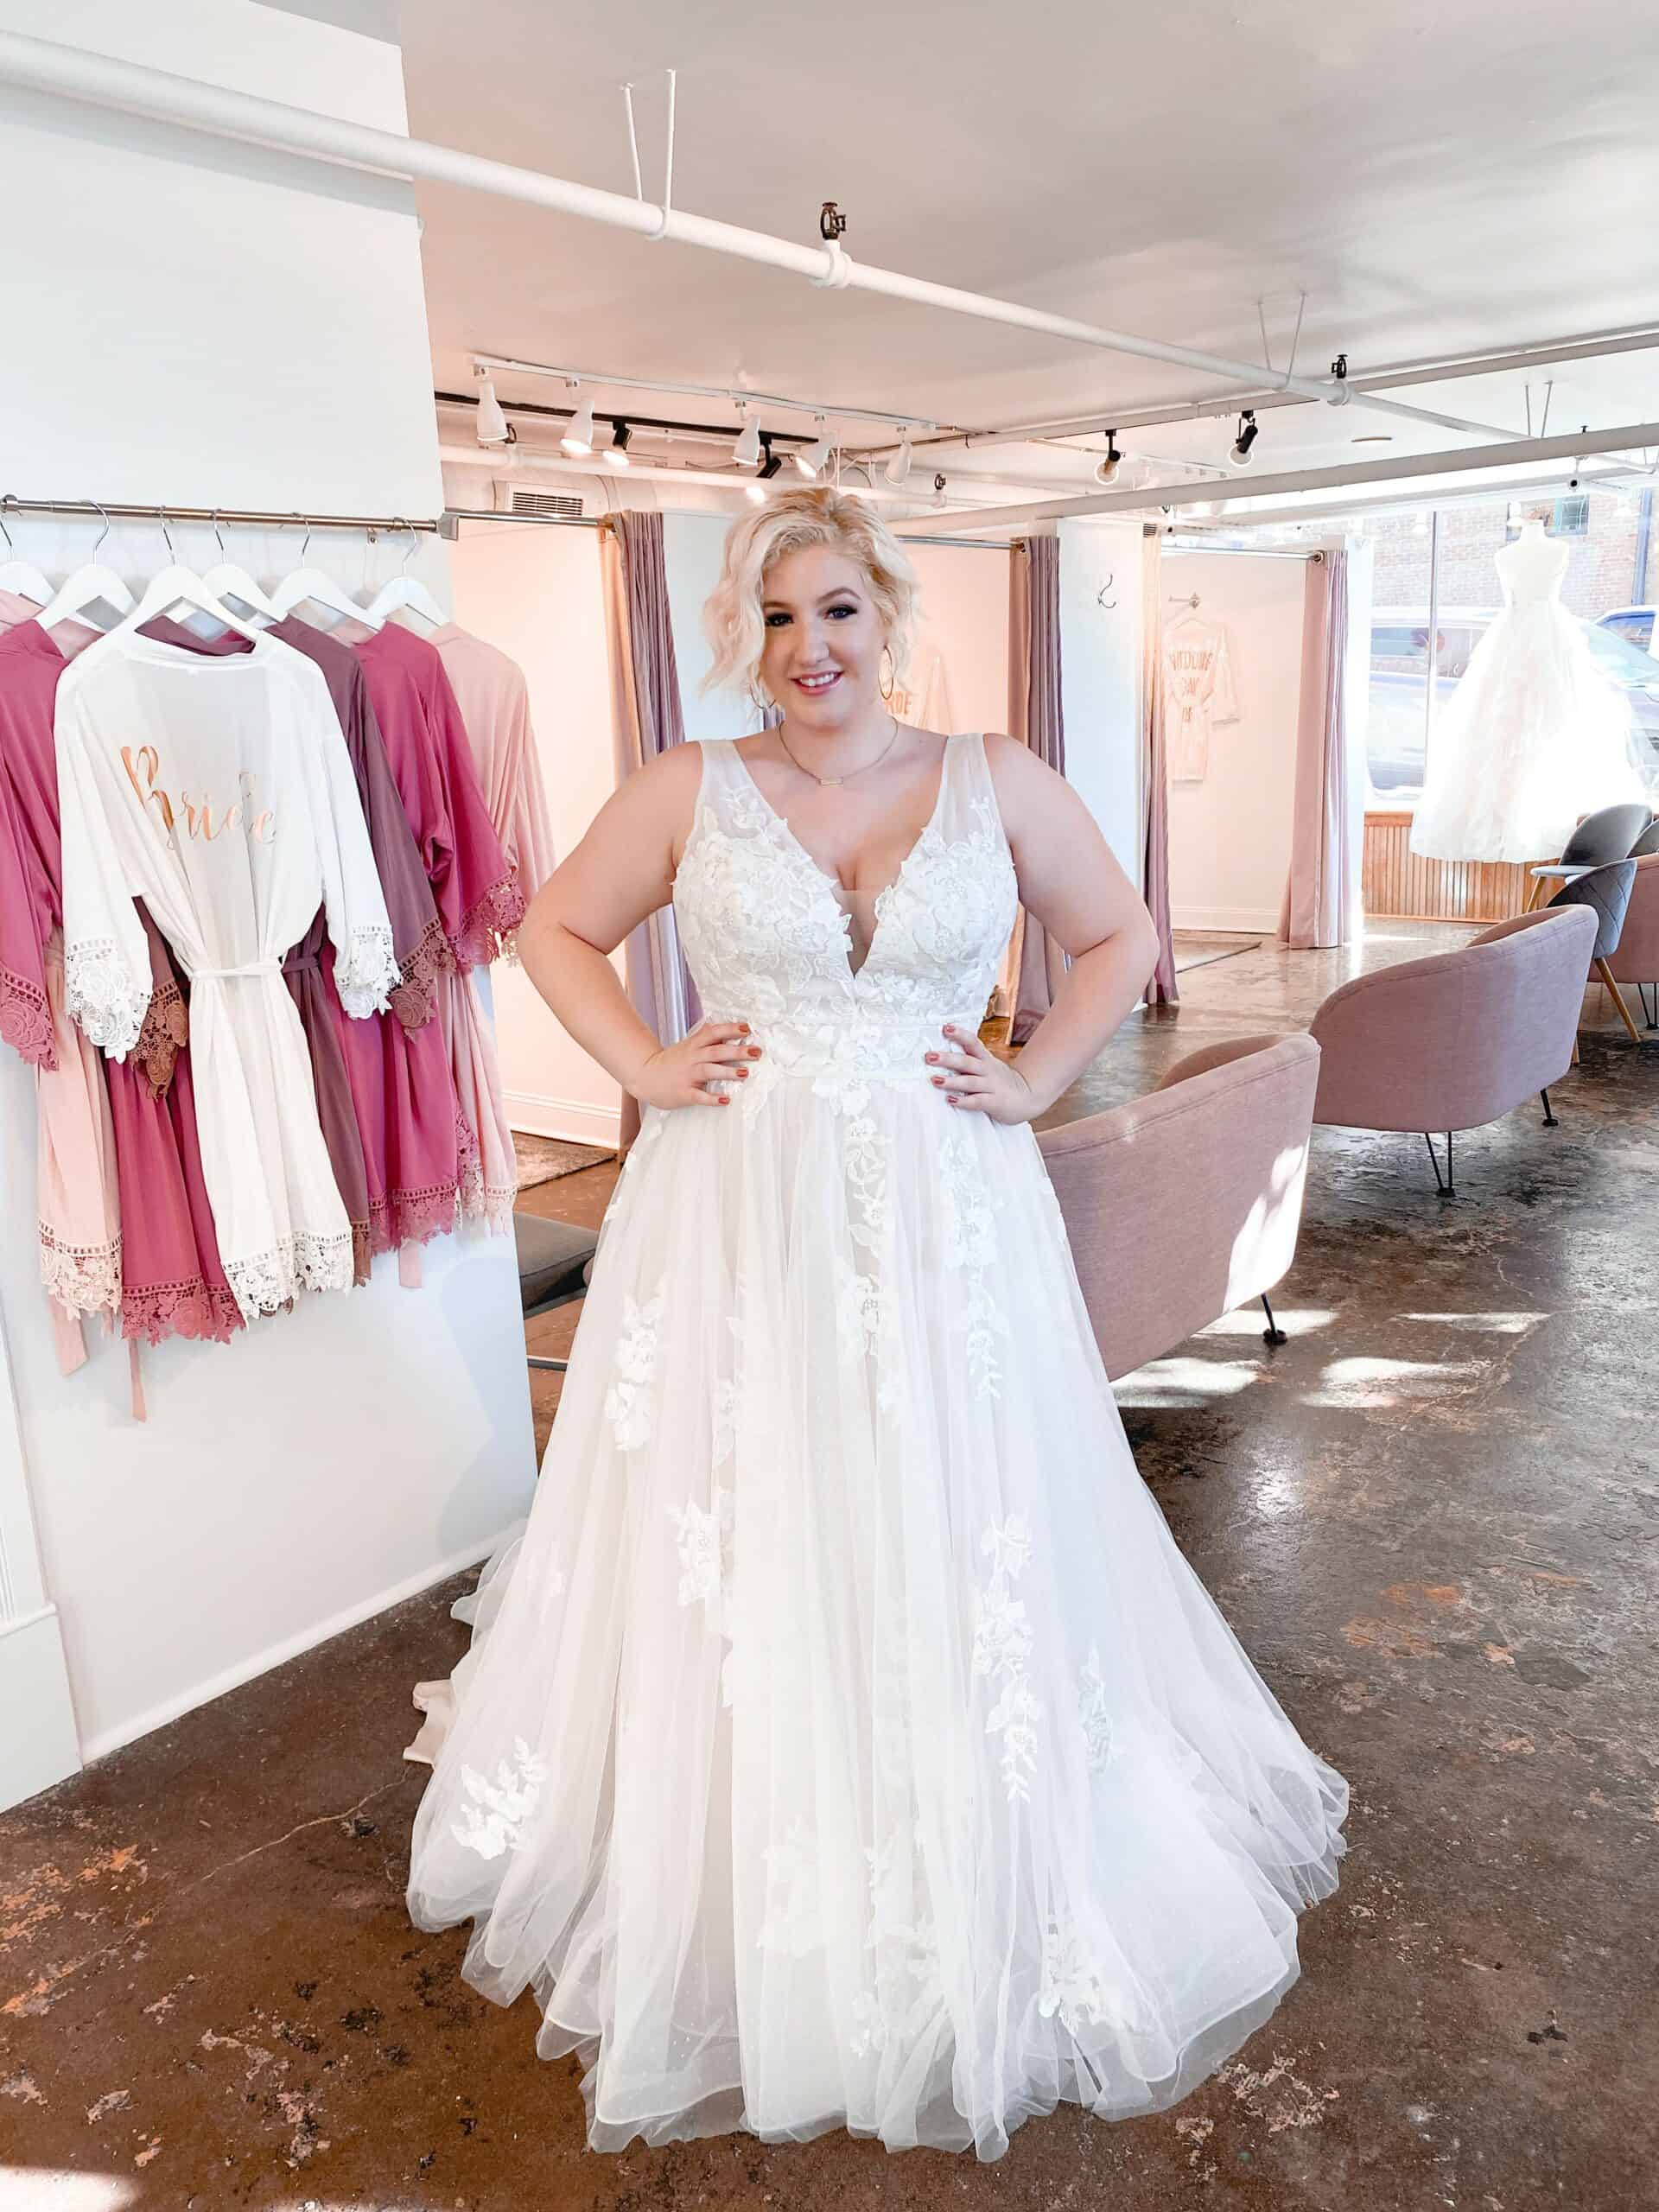 Best Wedding Dress Silhouettes for Plus-size Brides